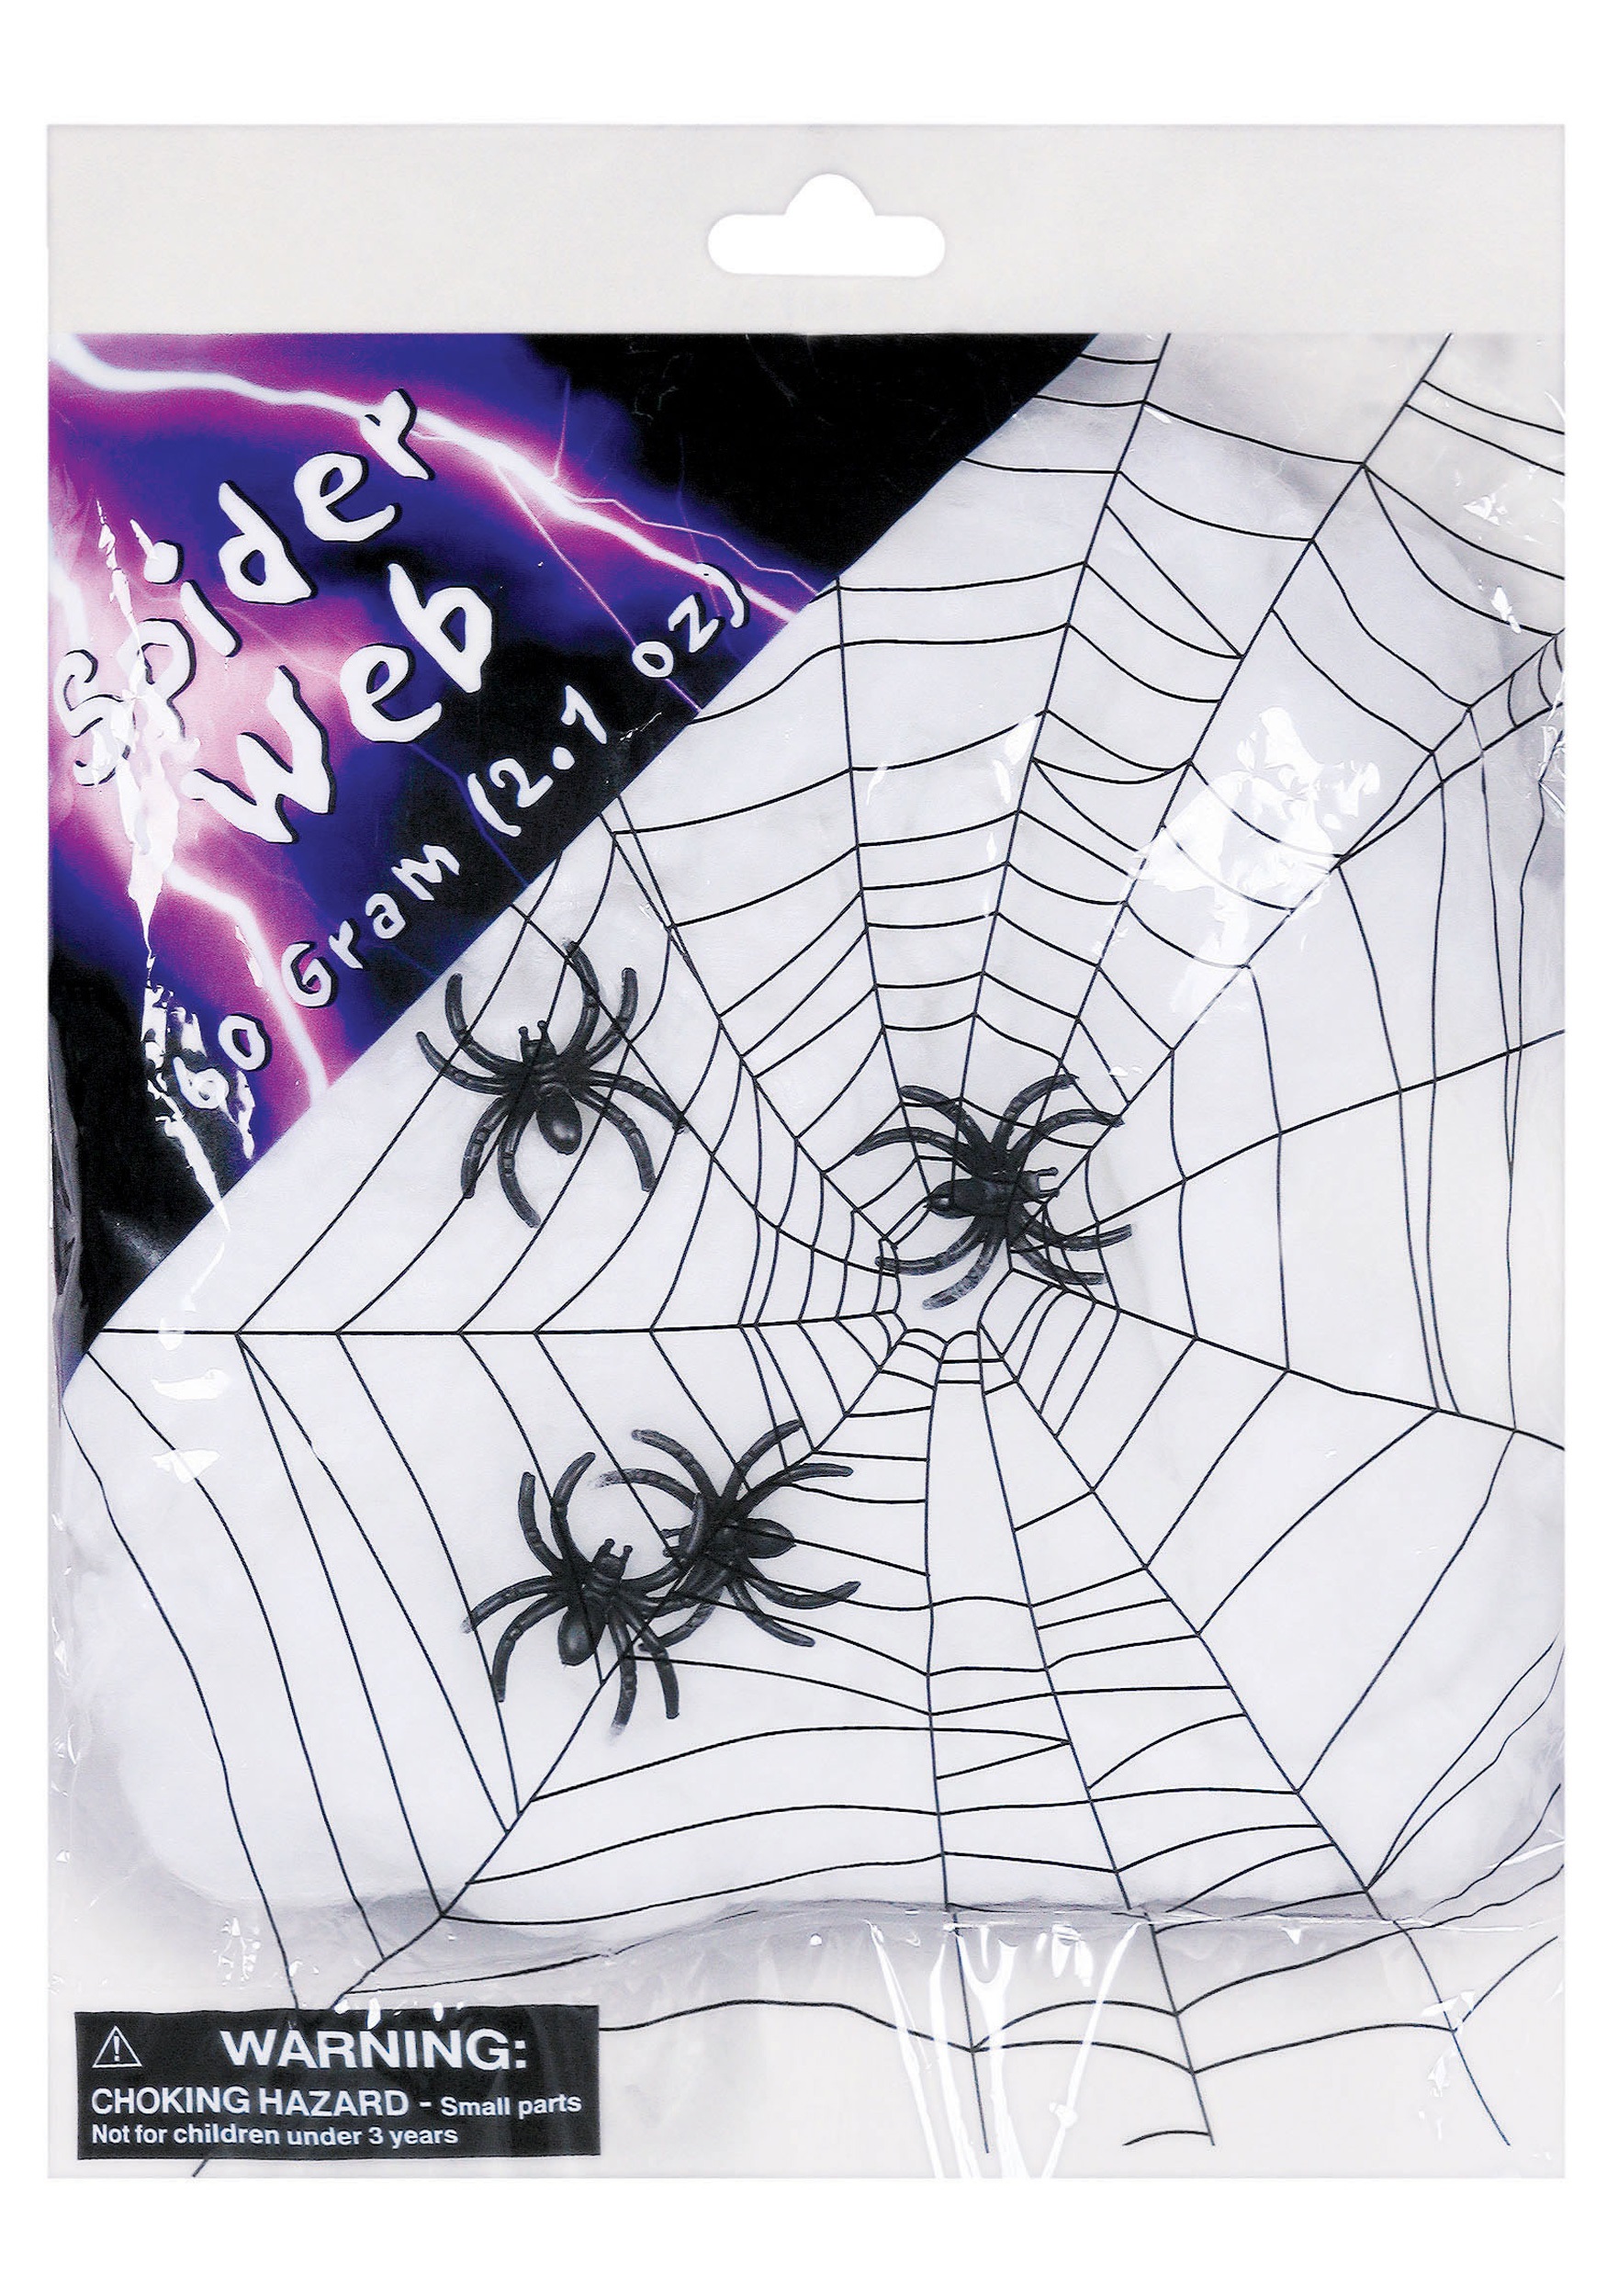 spider web decoration